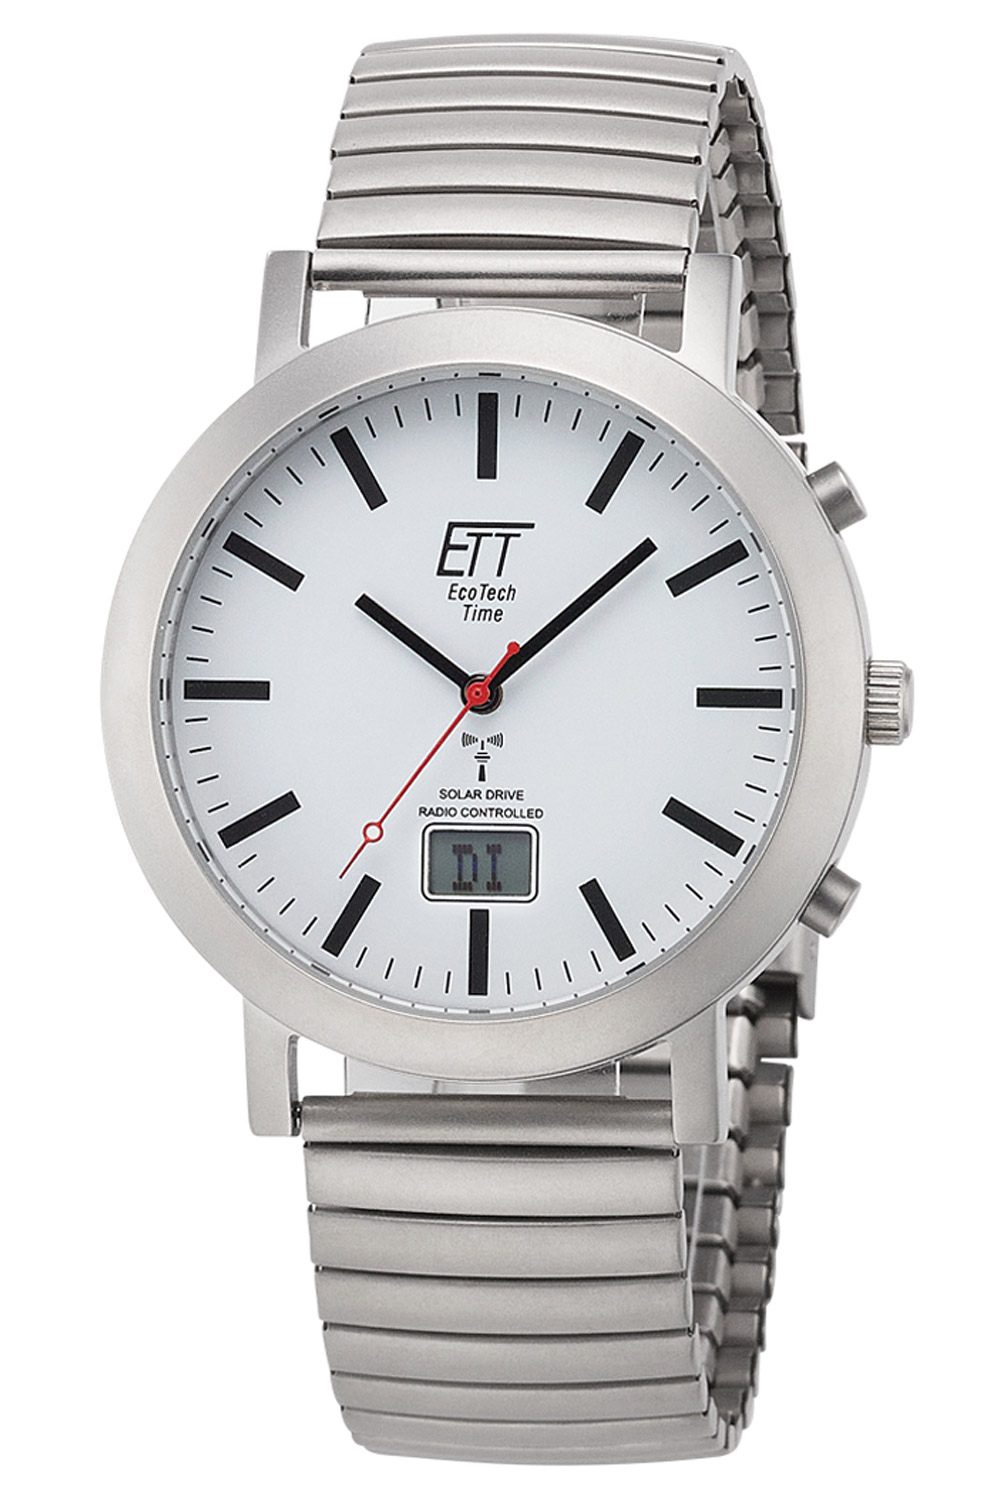 ETT Eco Tech Time Funk-Solar Herren-Armbanduhr Station Watch mit Zugband EGS-11580-11M  • uhrcenter